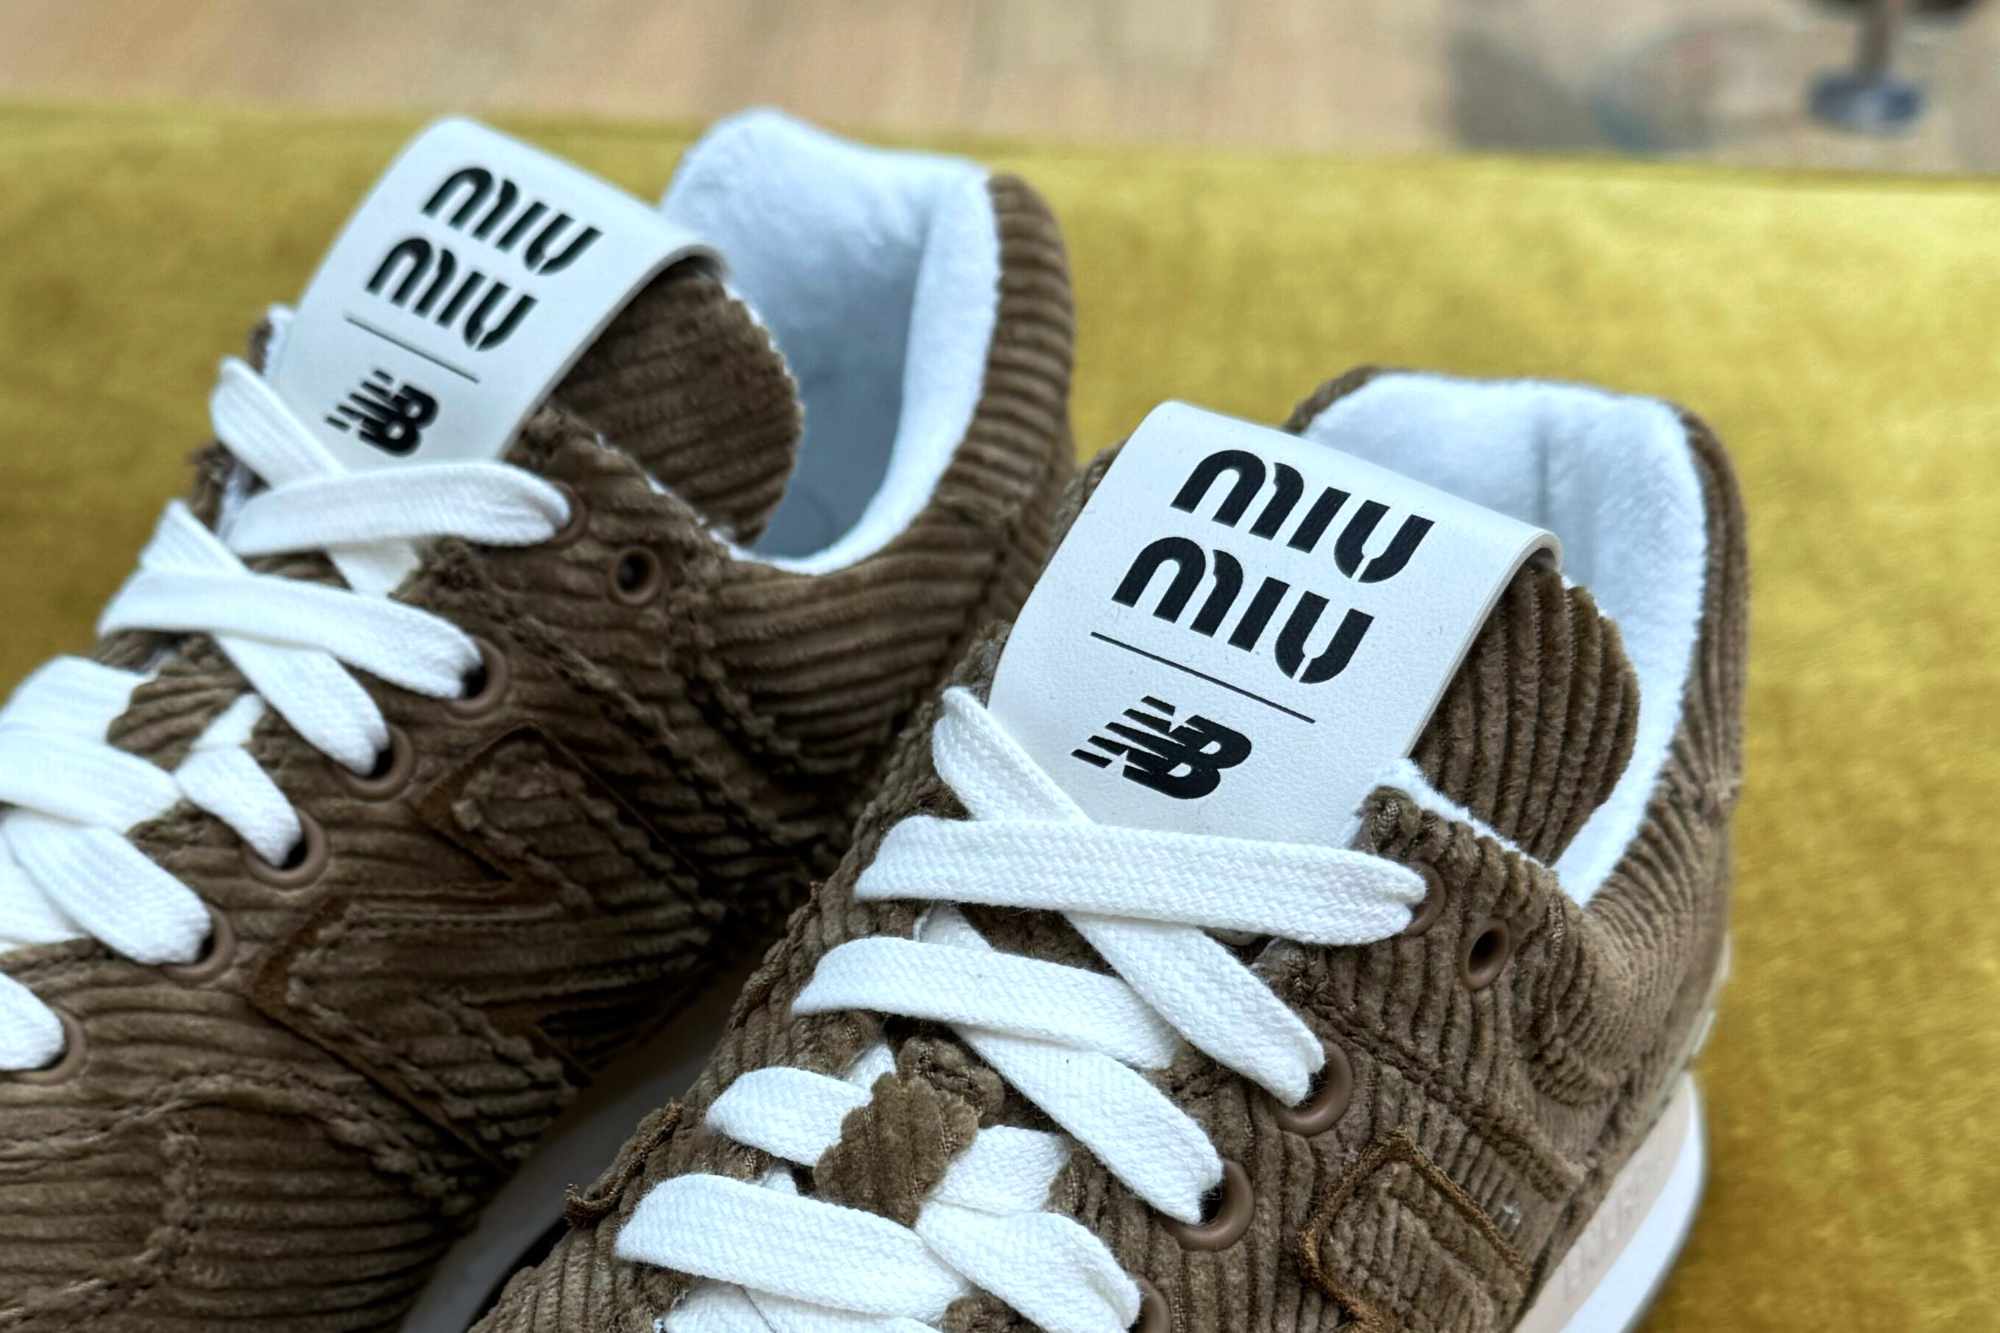 In-hand photographs of Miu Miu & New Balance's velvet 574 sneaker